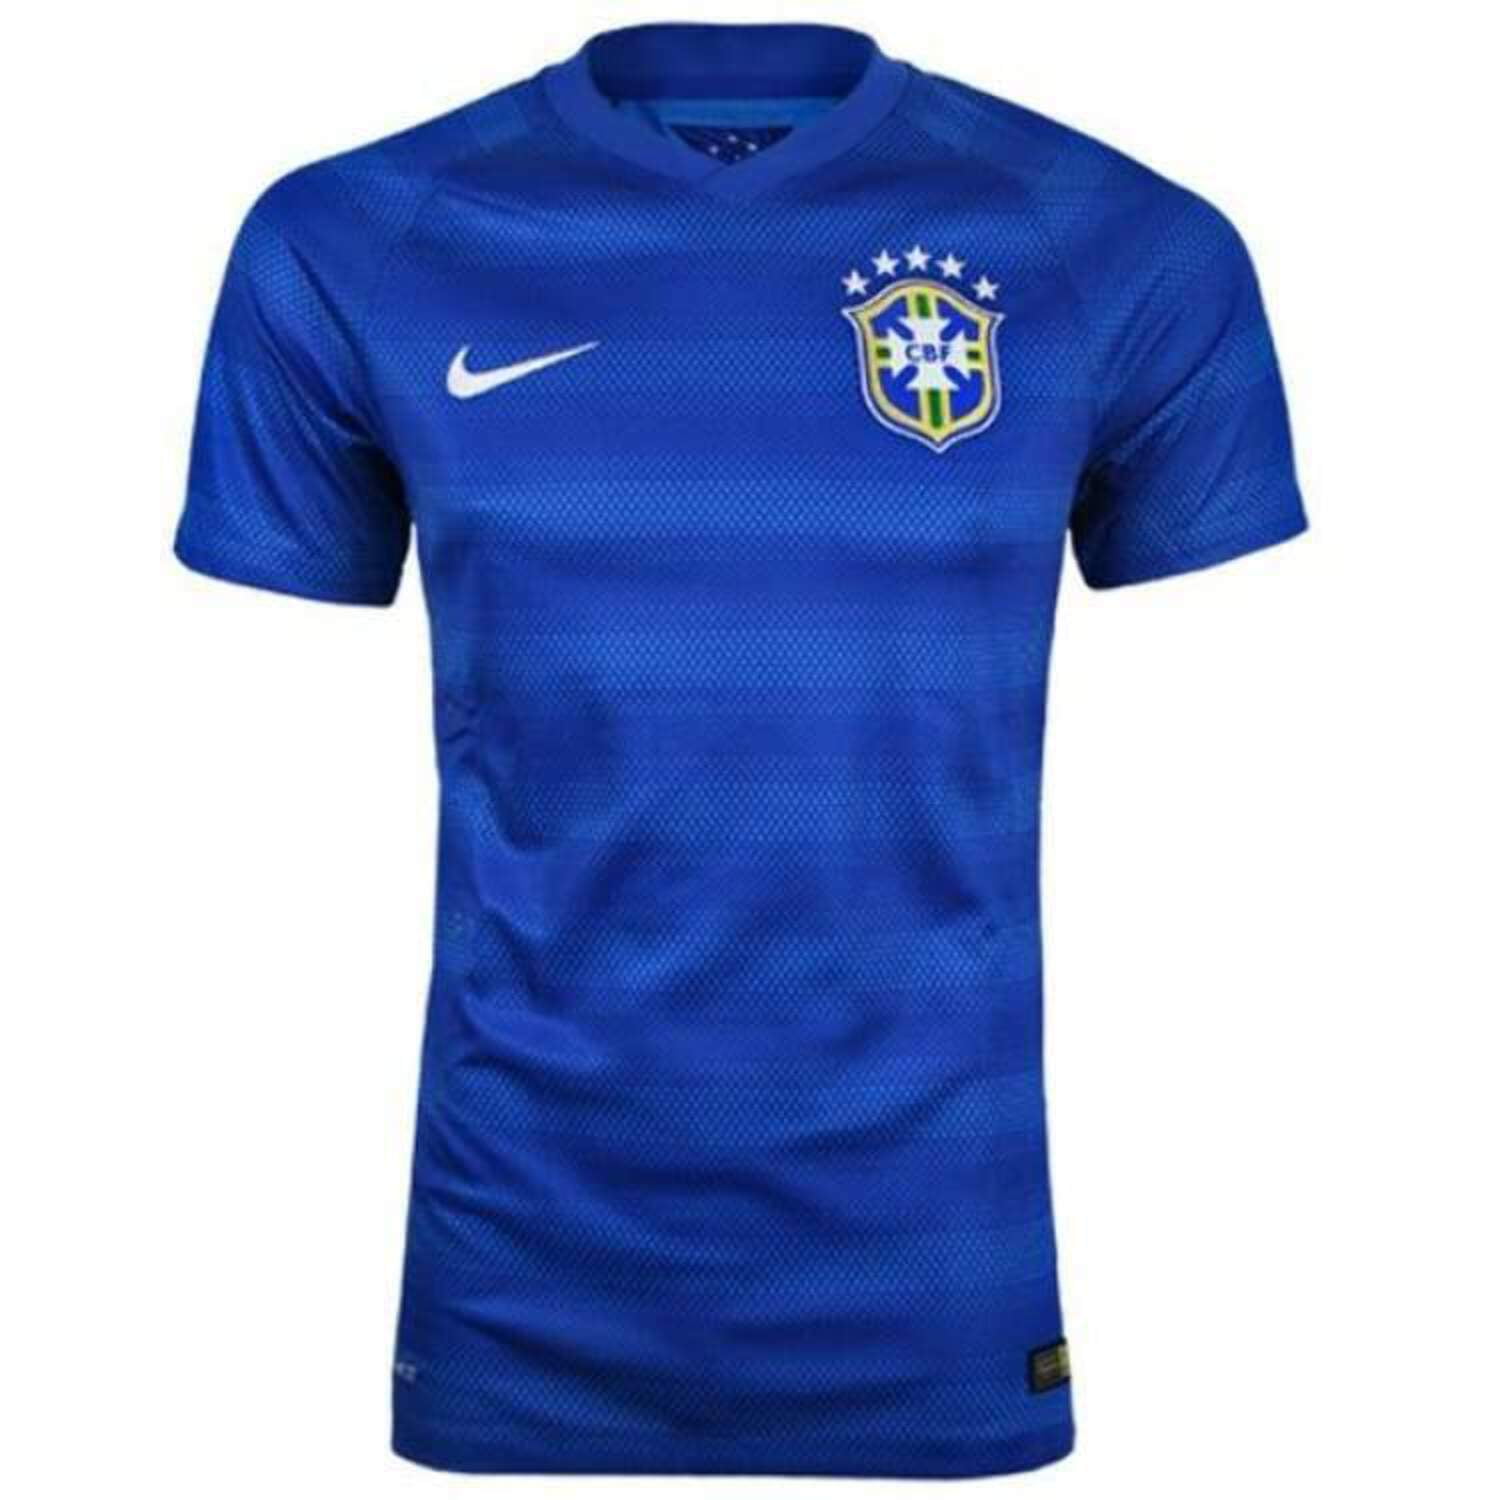 Nike Brazil - 2014 Away Jersey -Royal Blue XL Walmart.com